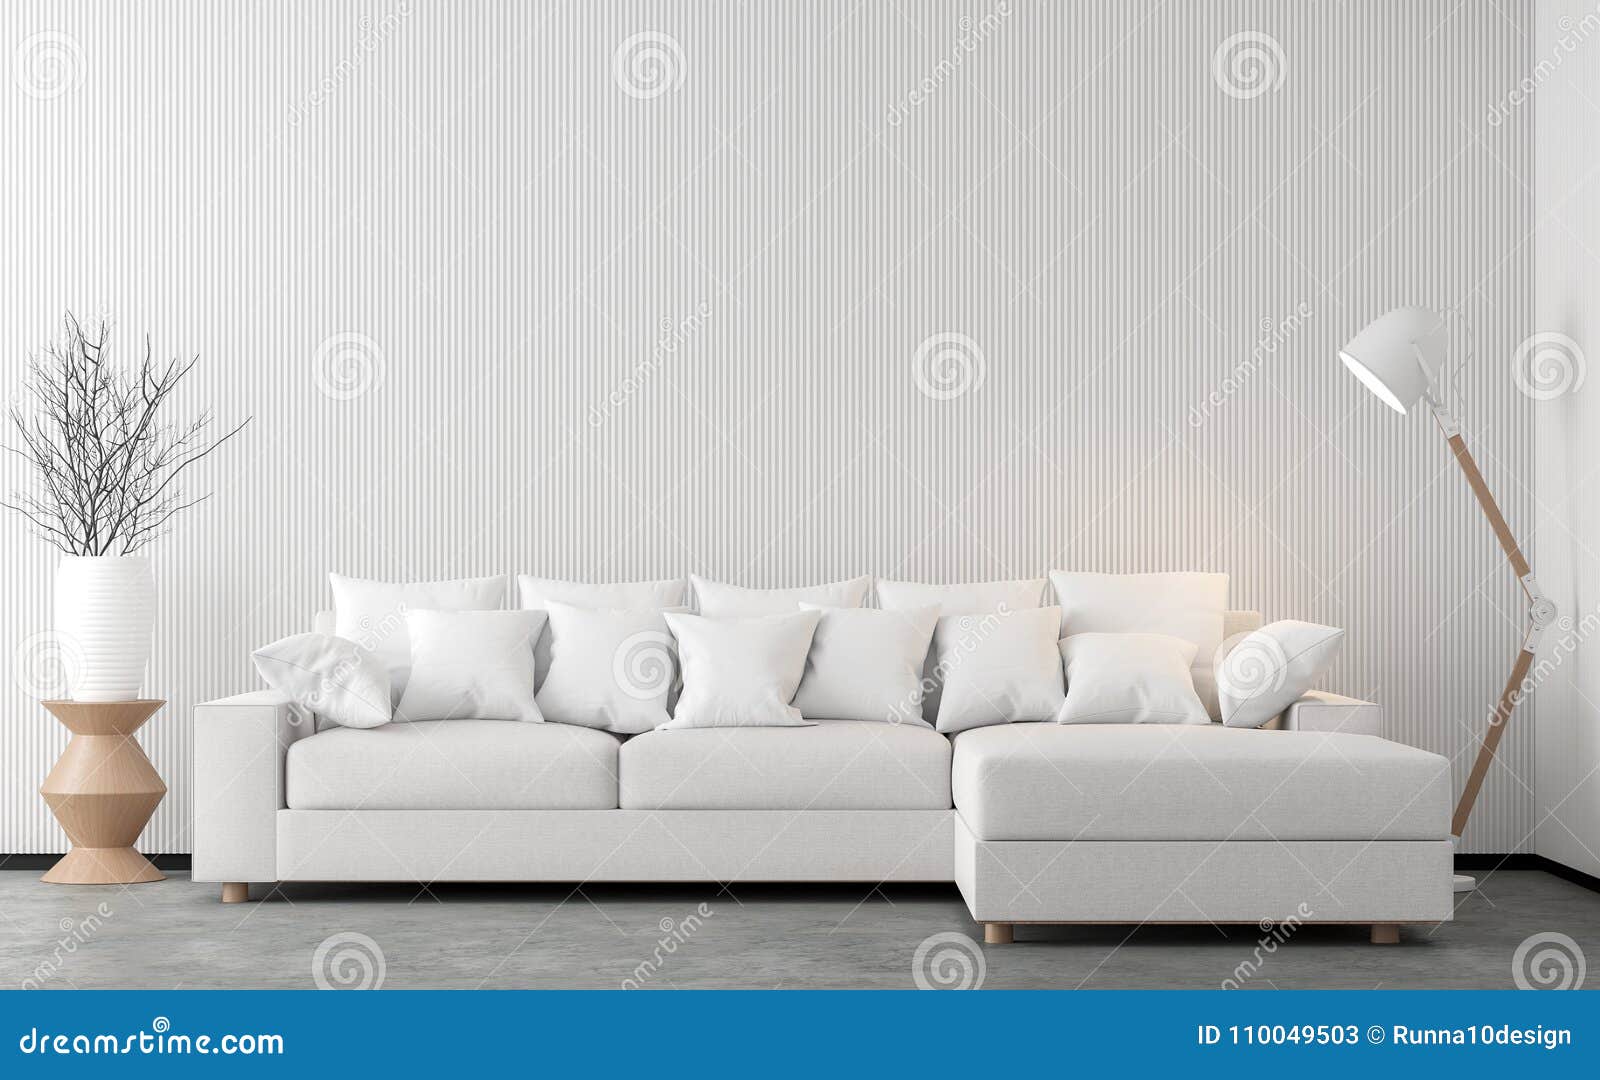 Minimal Style Living Room 3d Rendering Image Stock